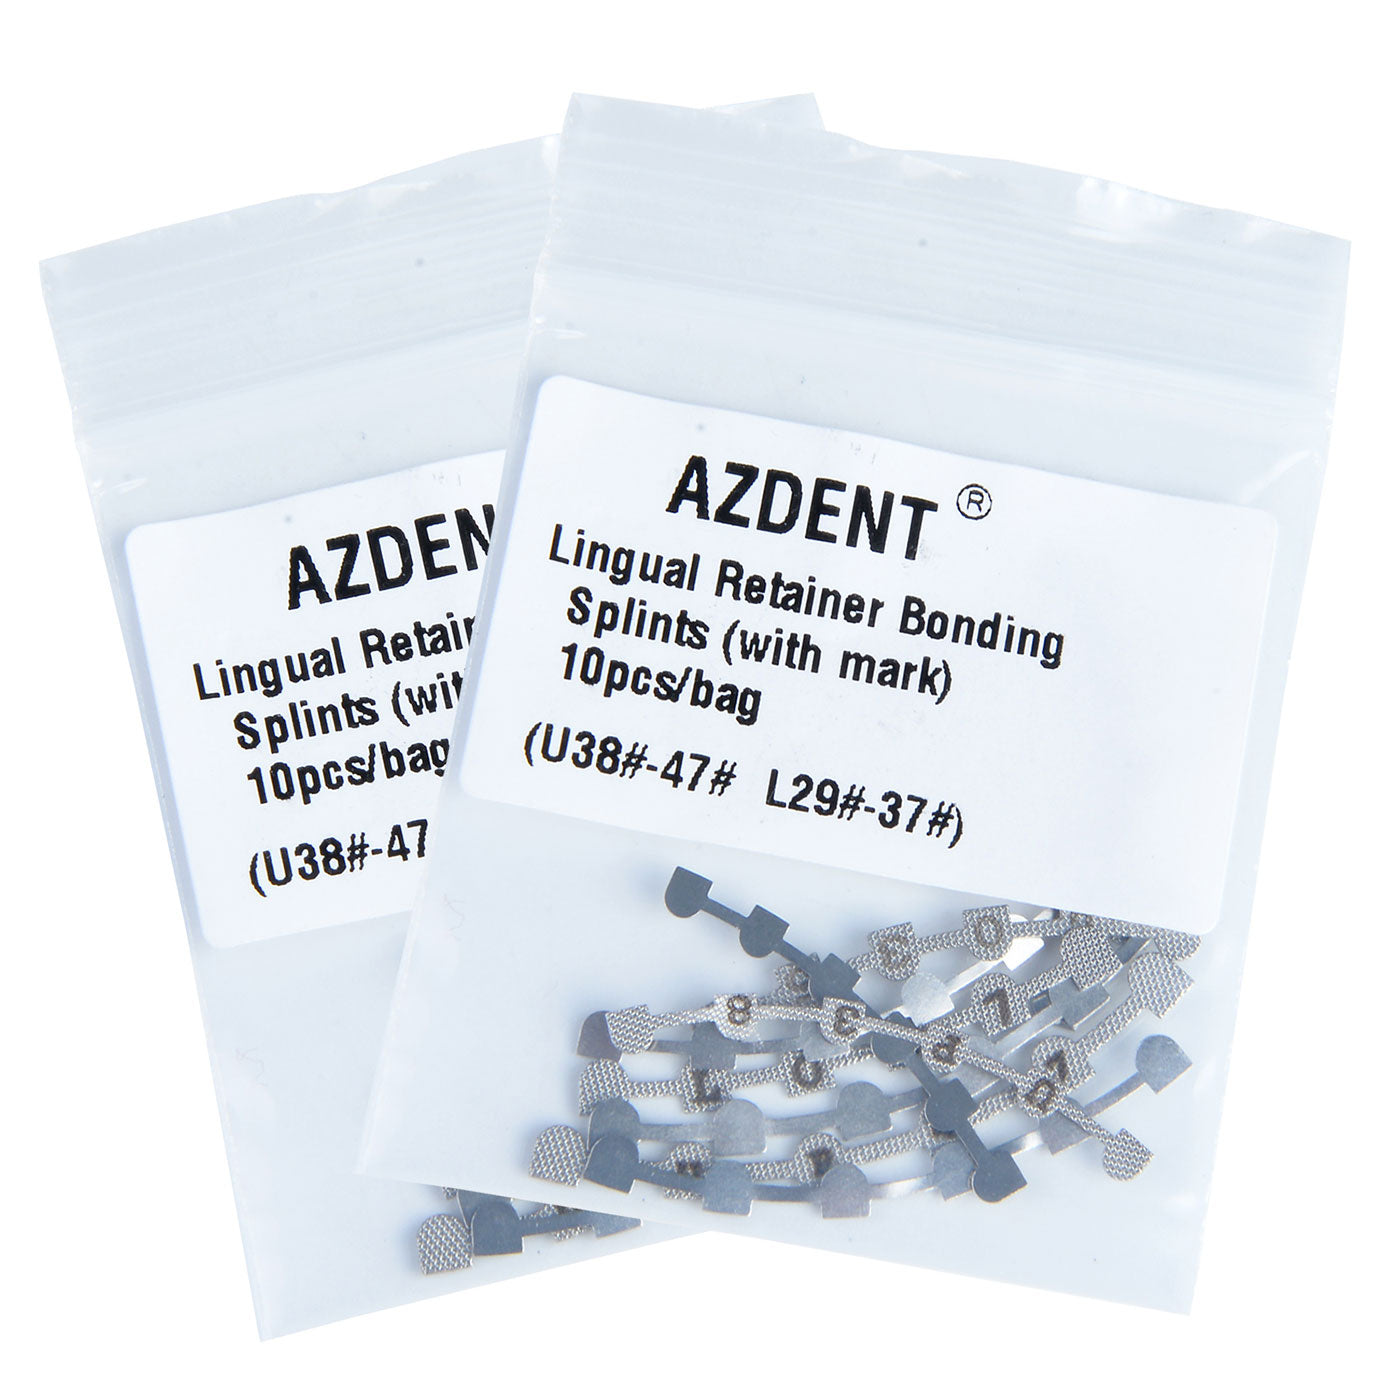 2 Bags AZDENT Dental Lingual Retainer Bonding Splits U#38-47 & L#29-37 With Mark 10pcs/Bag - azdentall.com